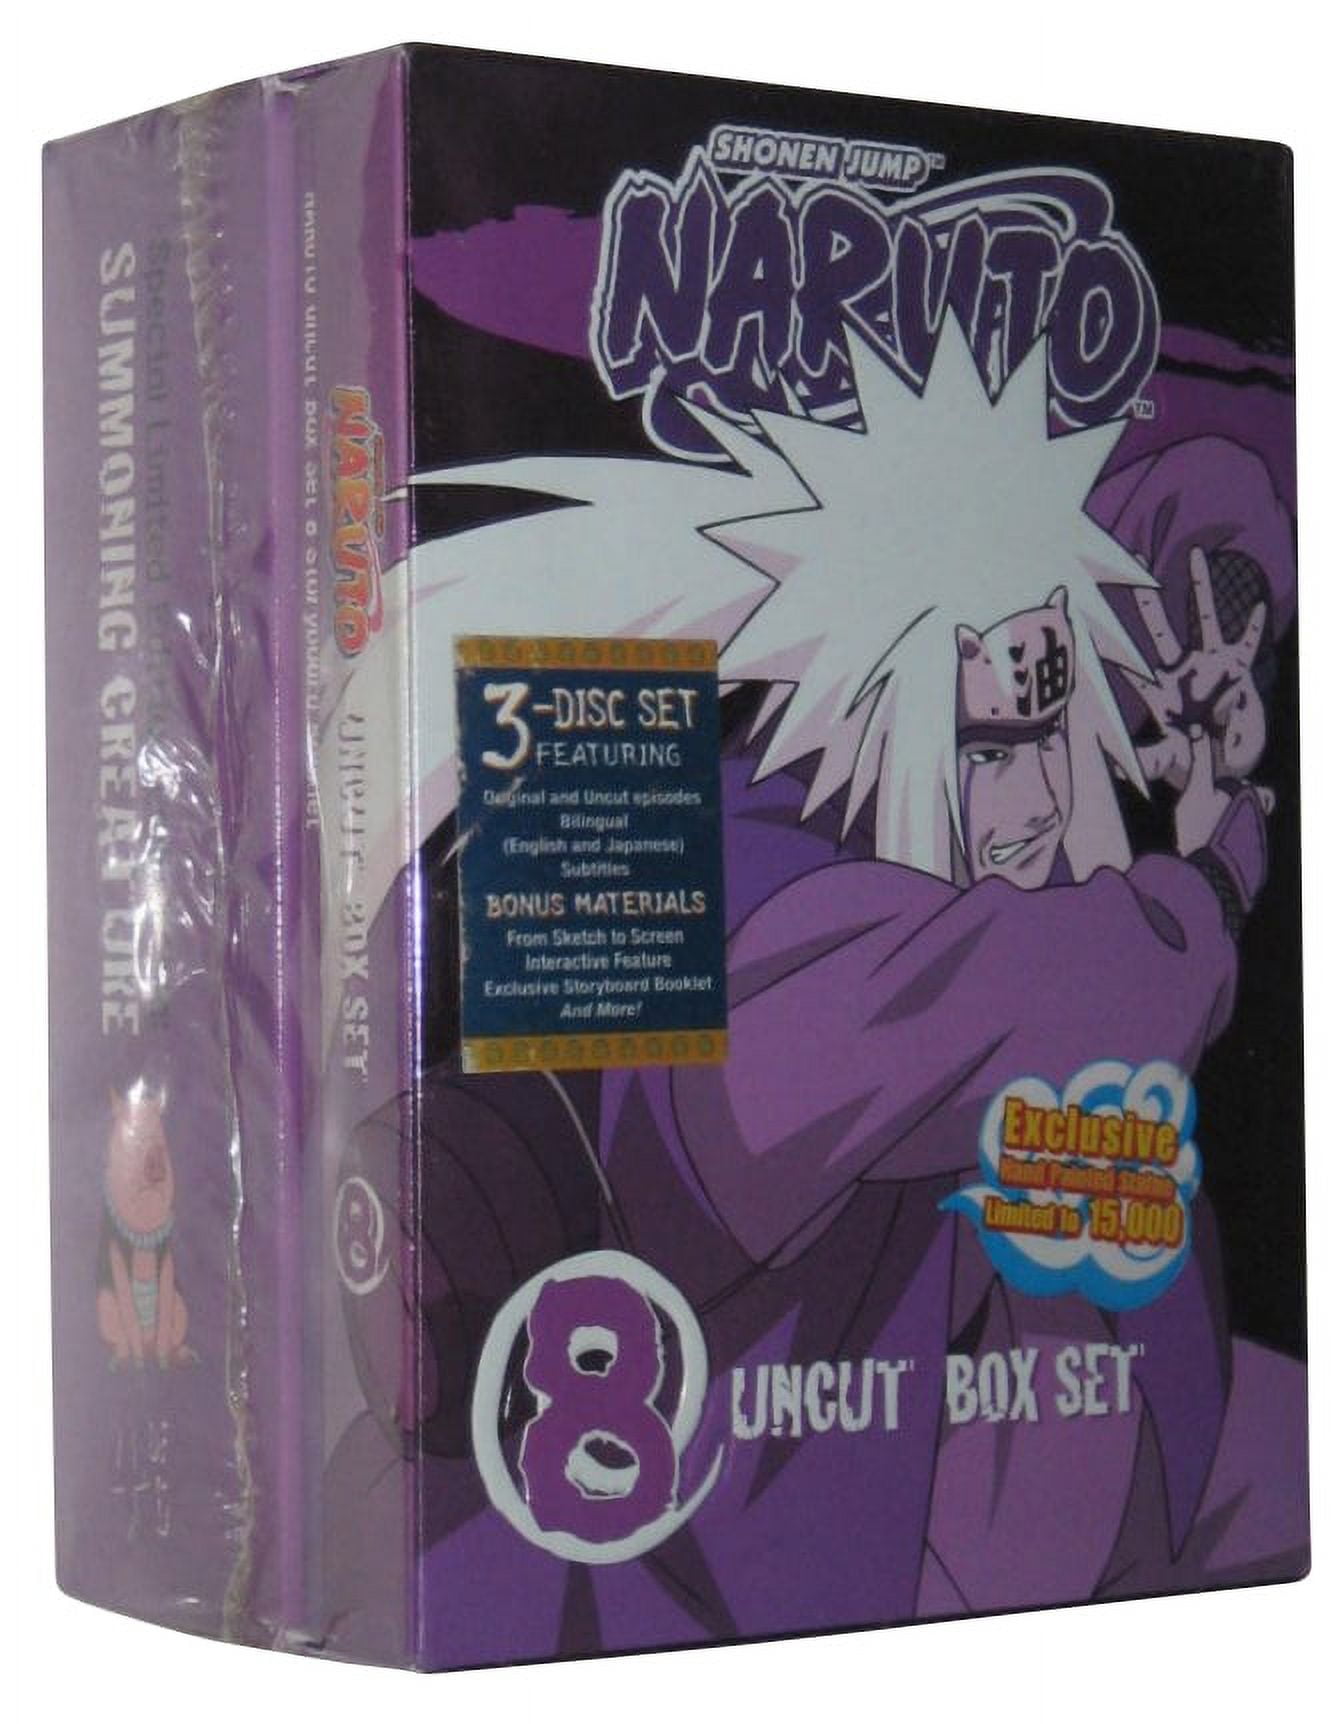 Dvd box naruto volume 8 5 disco